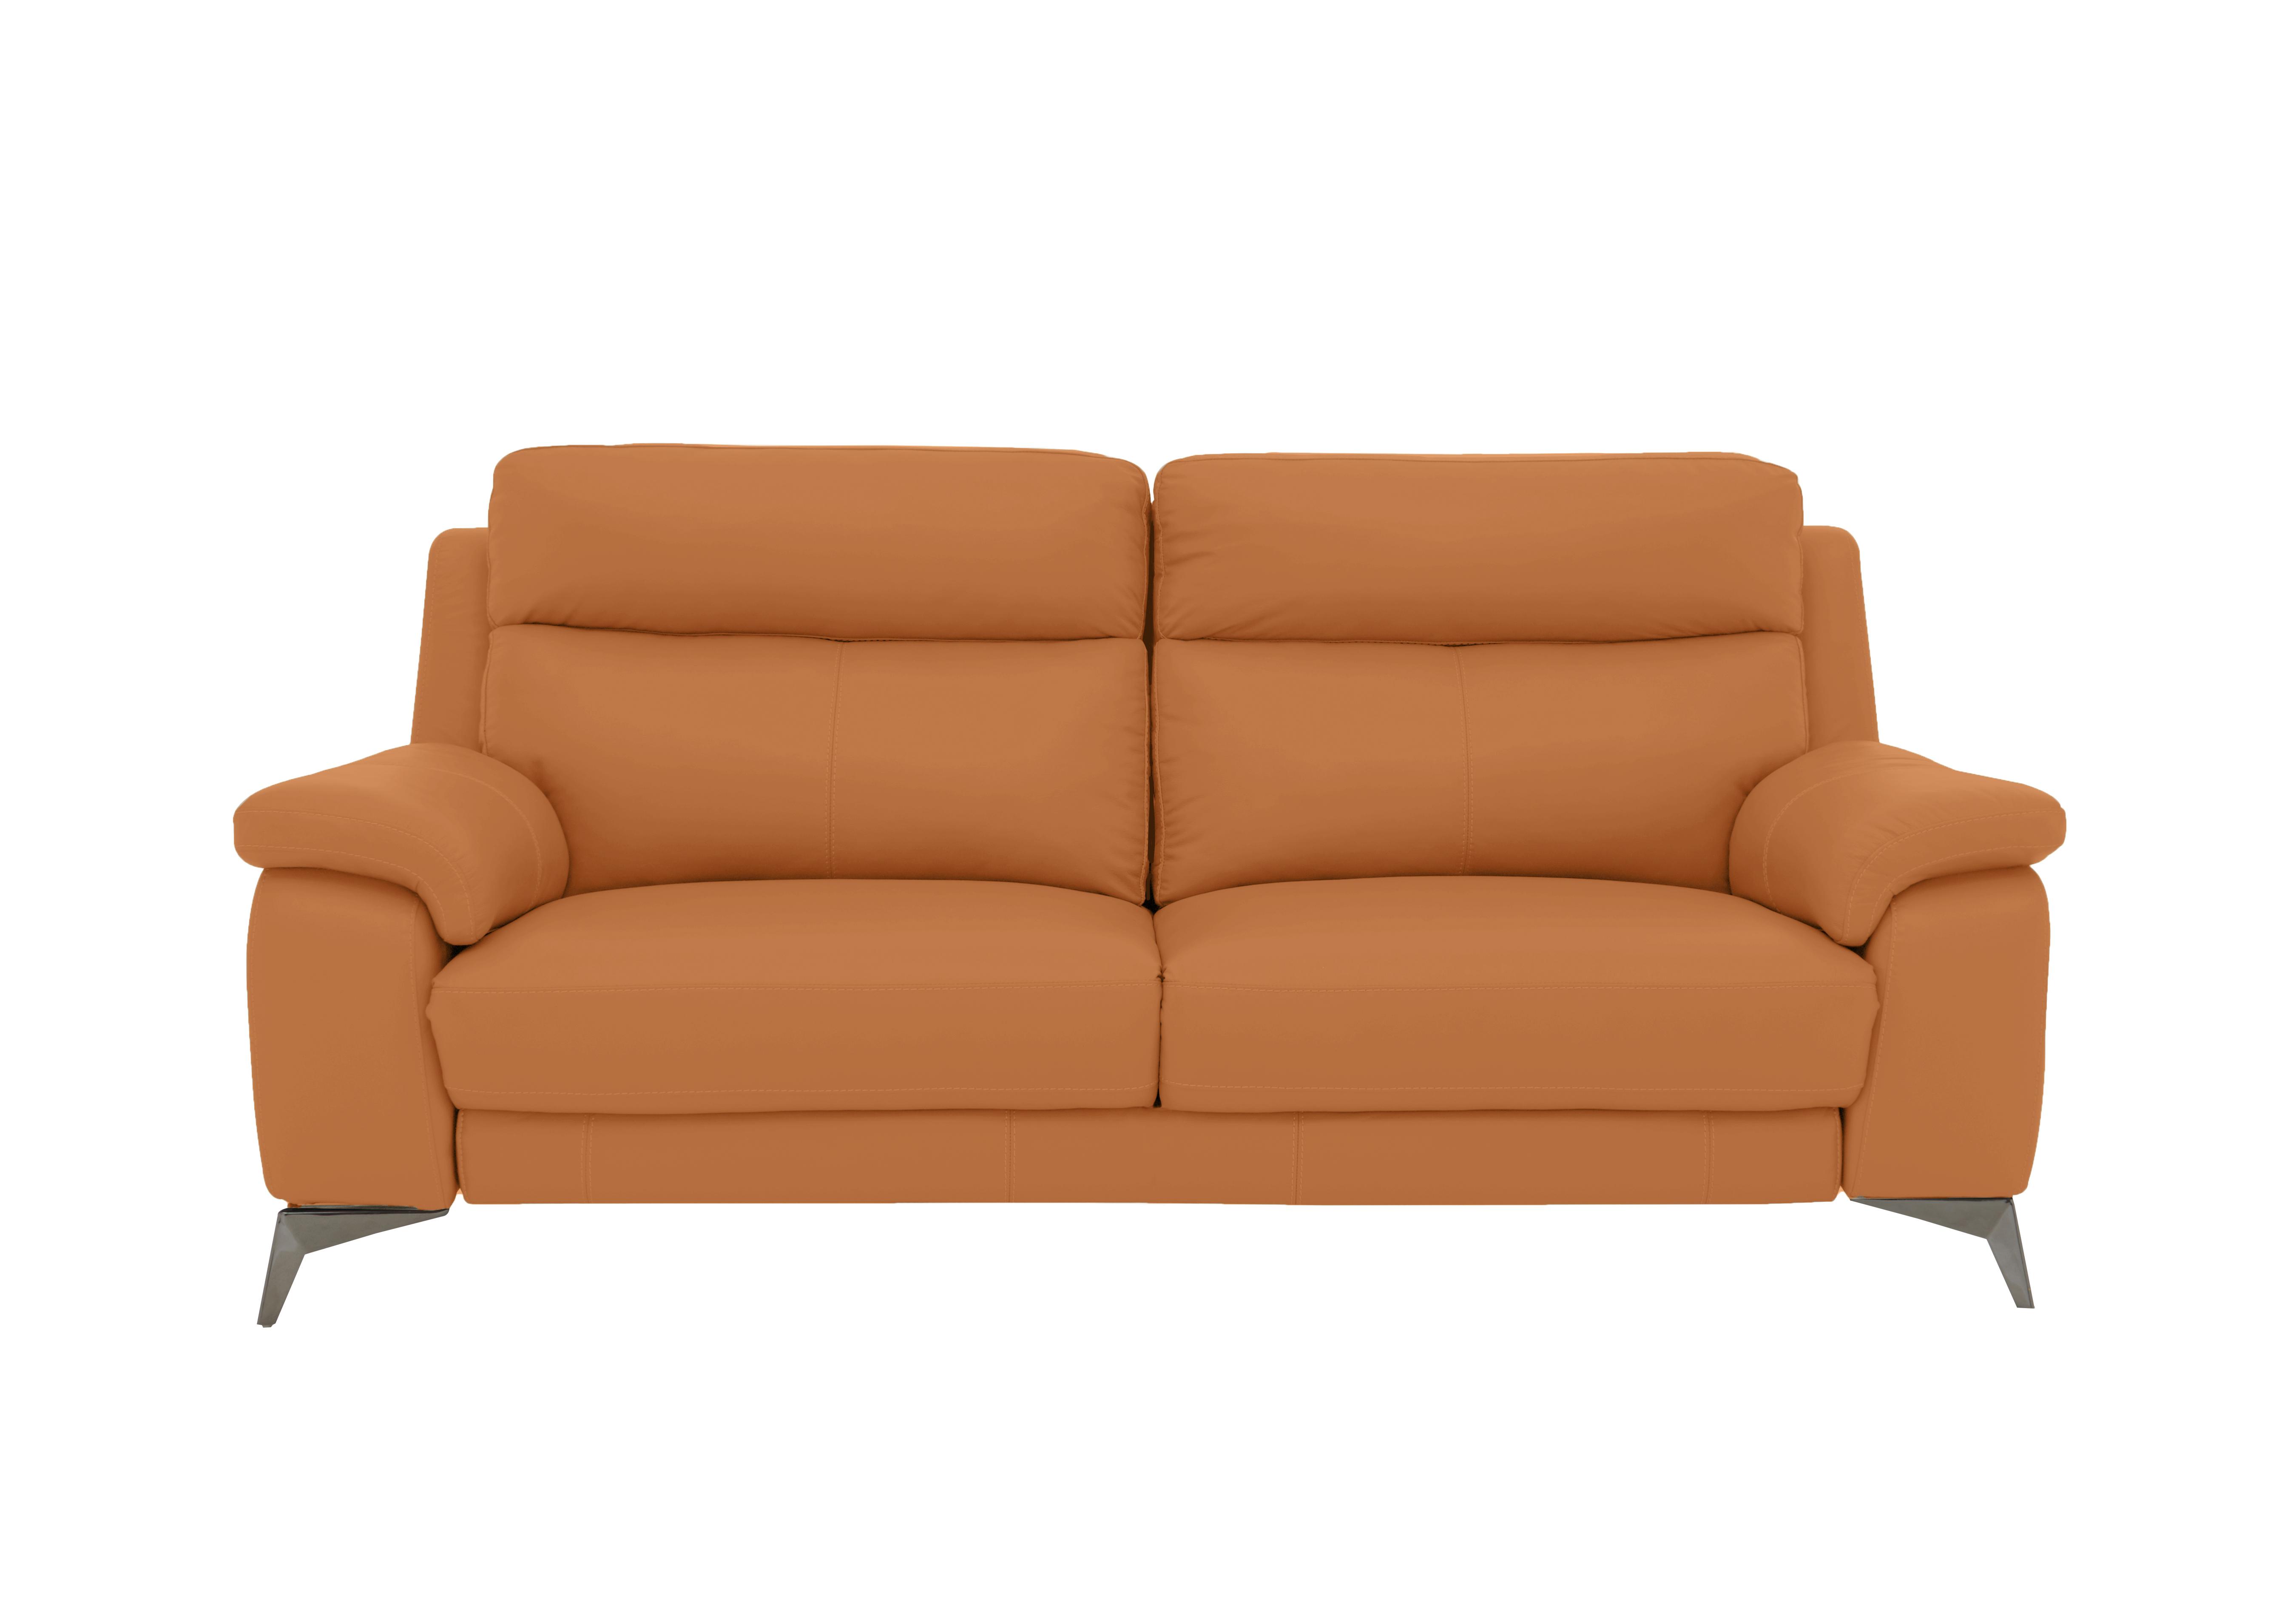 Missouri 3 Seater Leather Sofa in Bv-335e Honey Yellow on Furniture Village